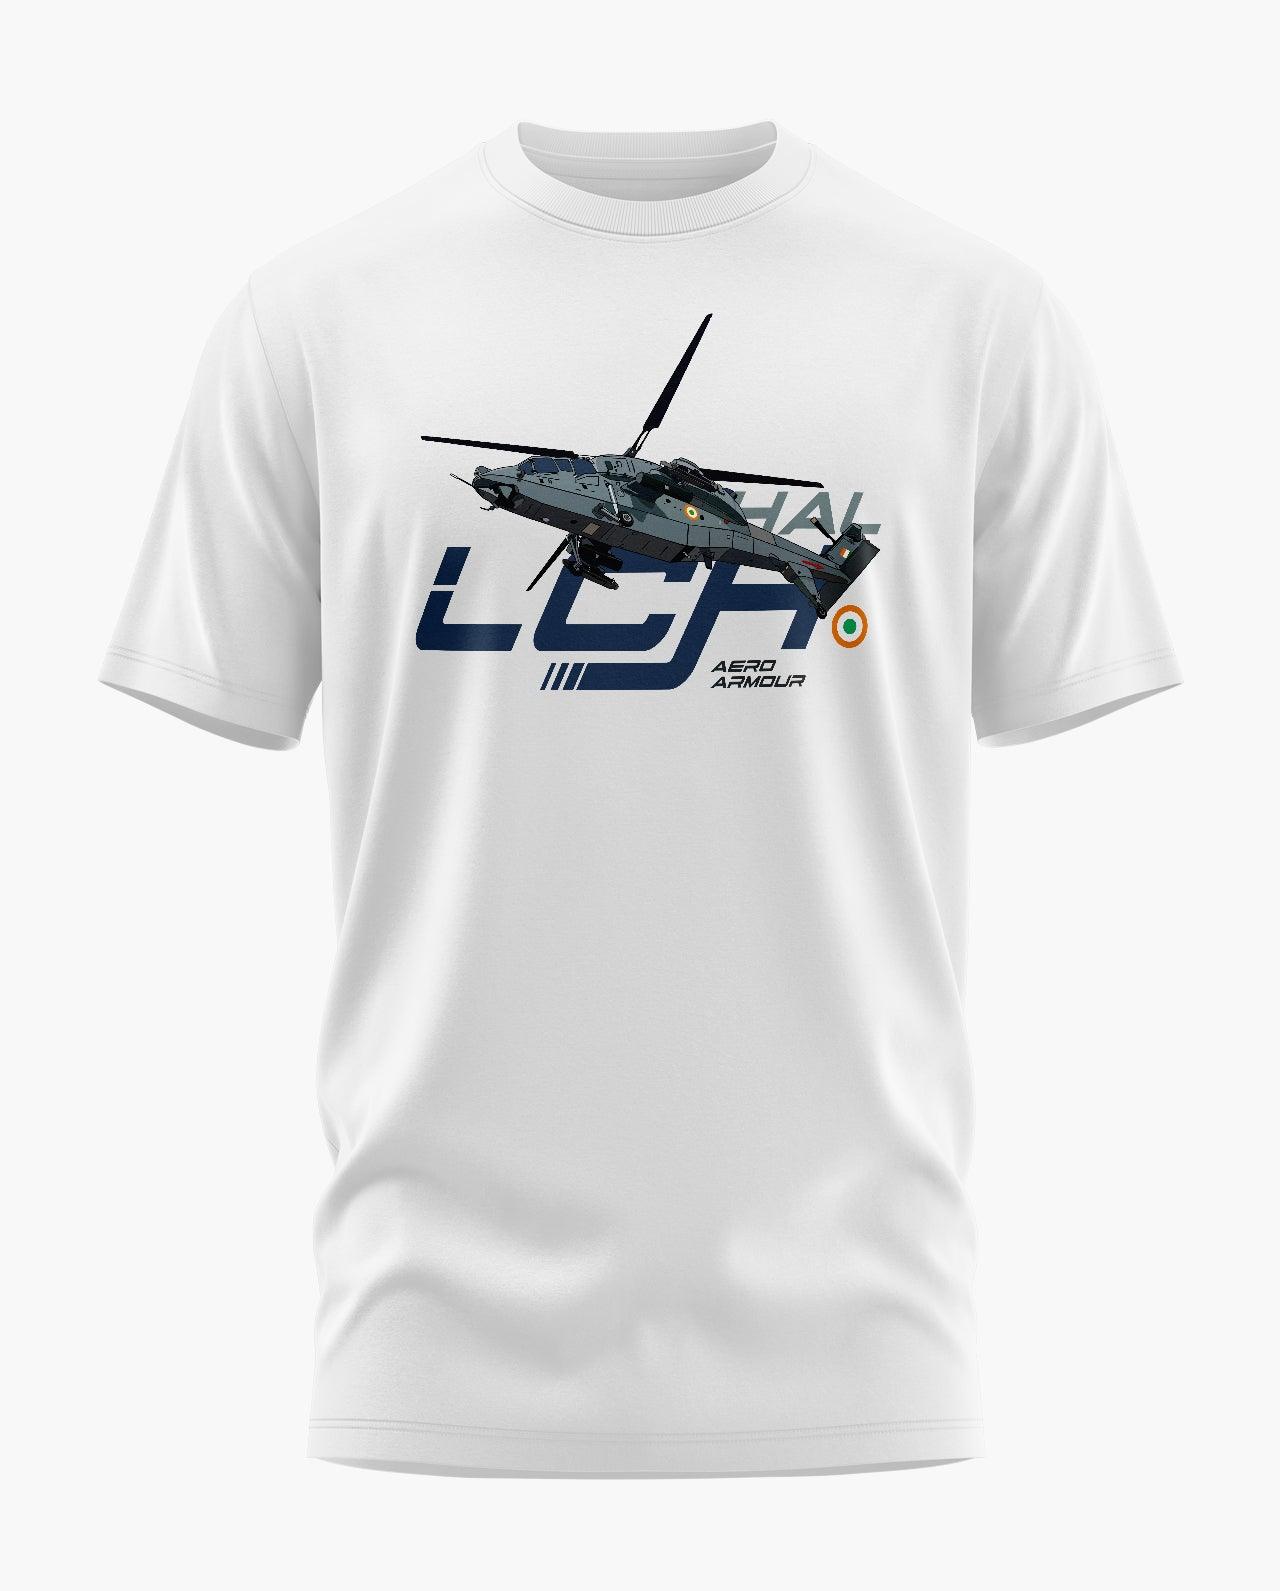 HAL LCH Typo T-Shirt - Aero Armour